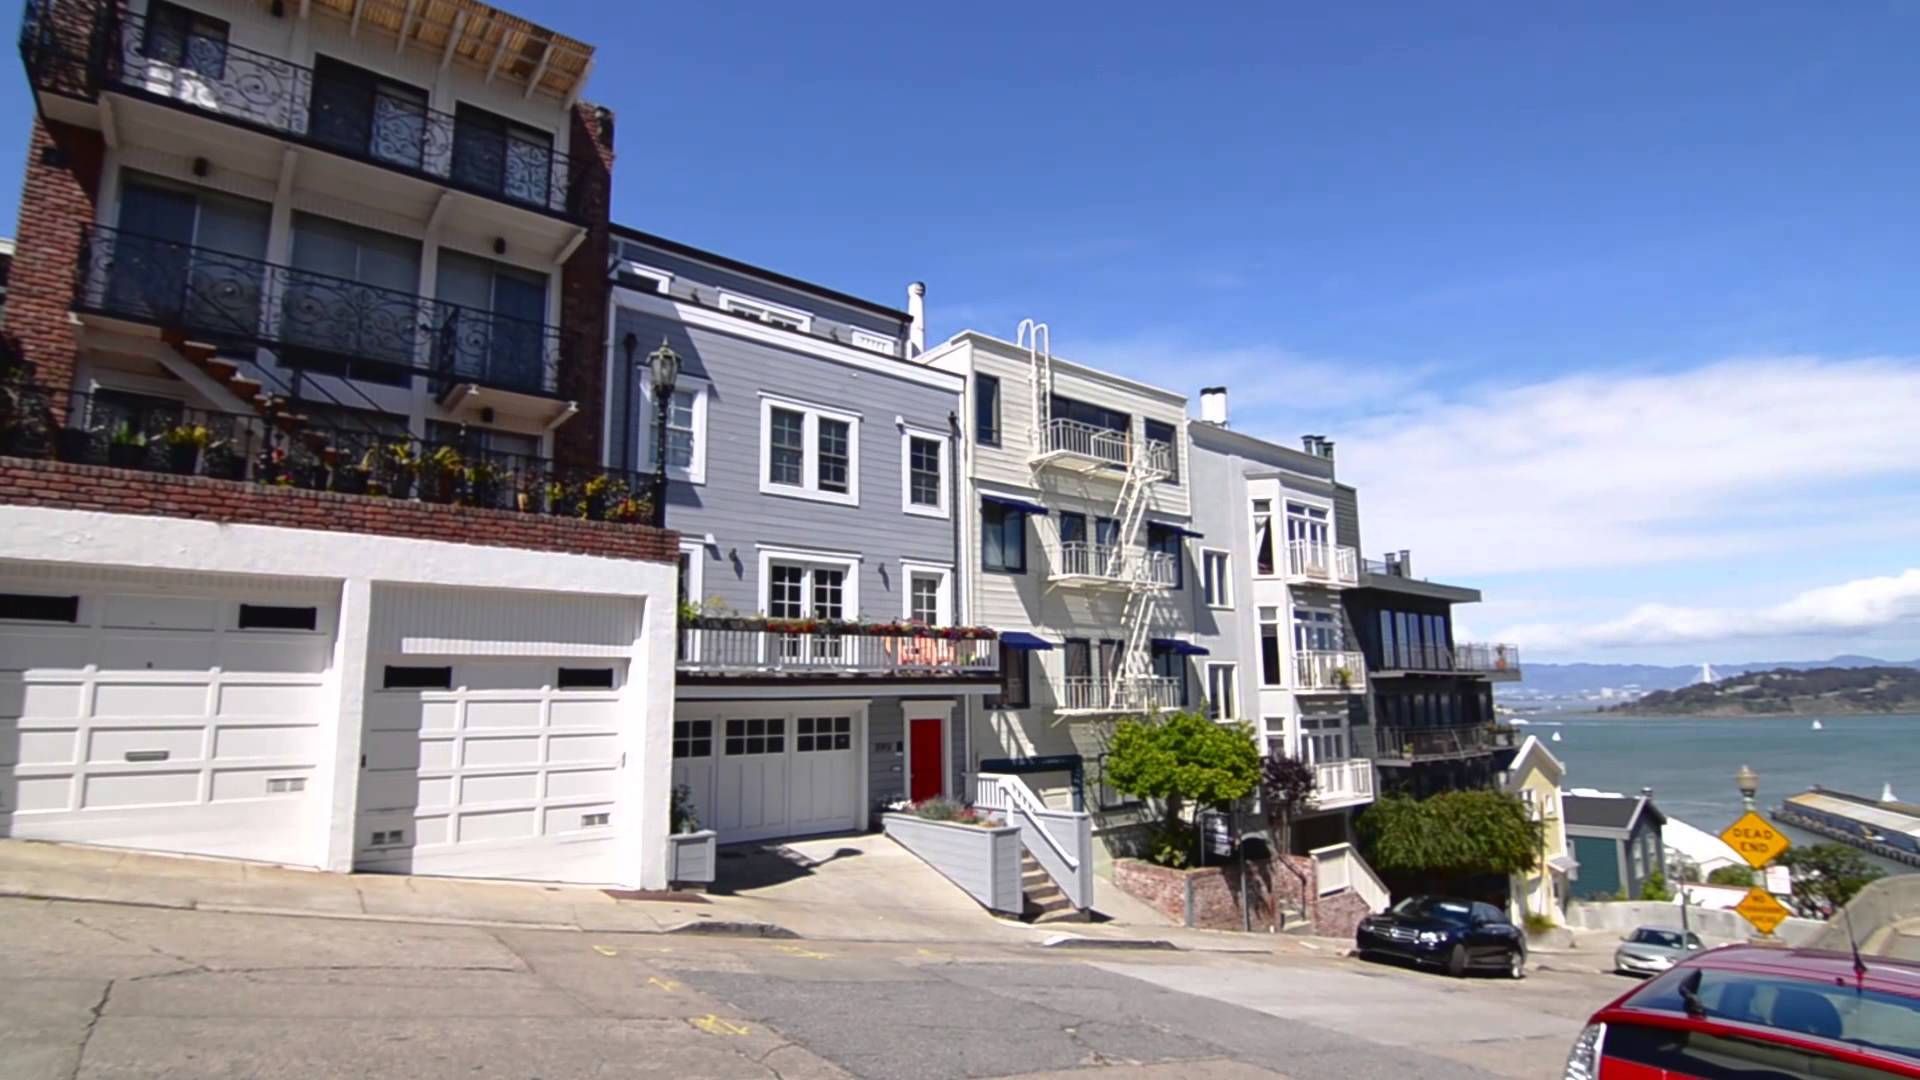 Telegraph Hill, San Francisco - Neighborhood Video - YouTube